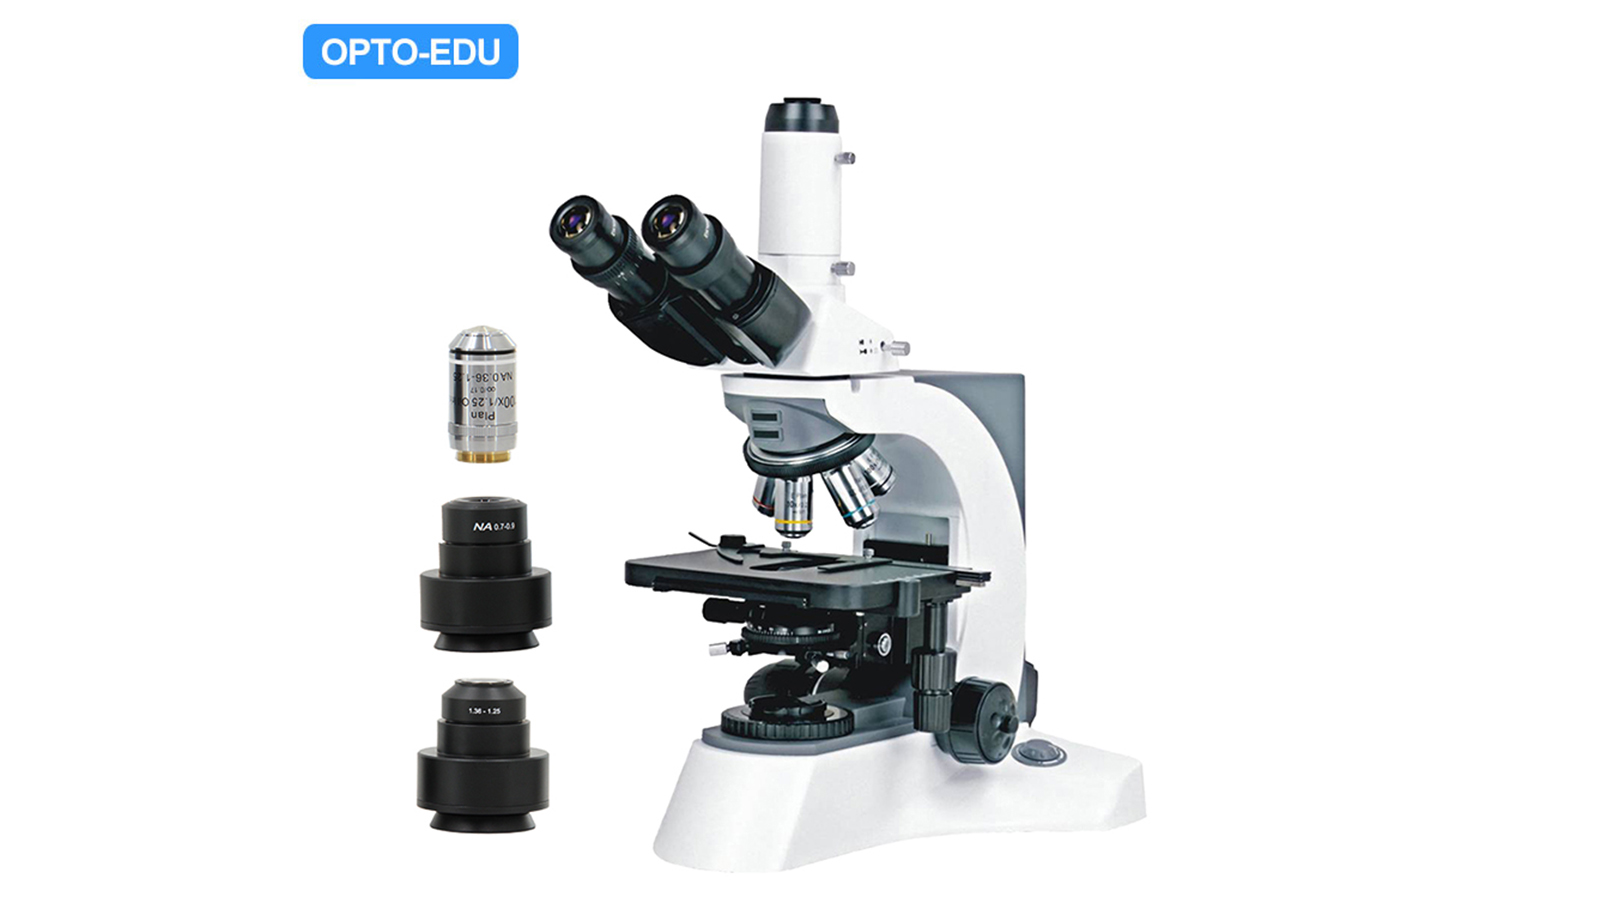 A10.1018 Microscope professionnel à fond noir